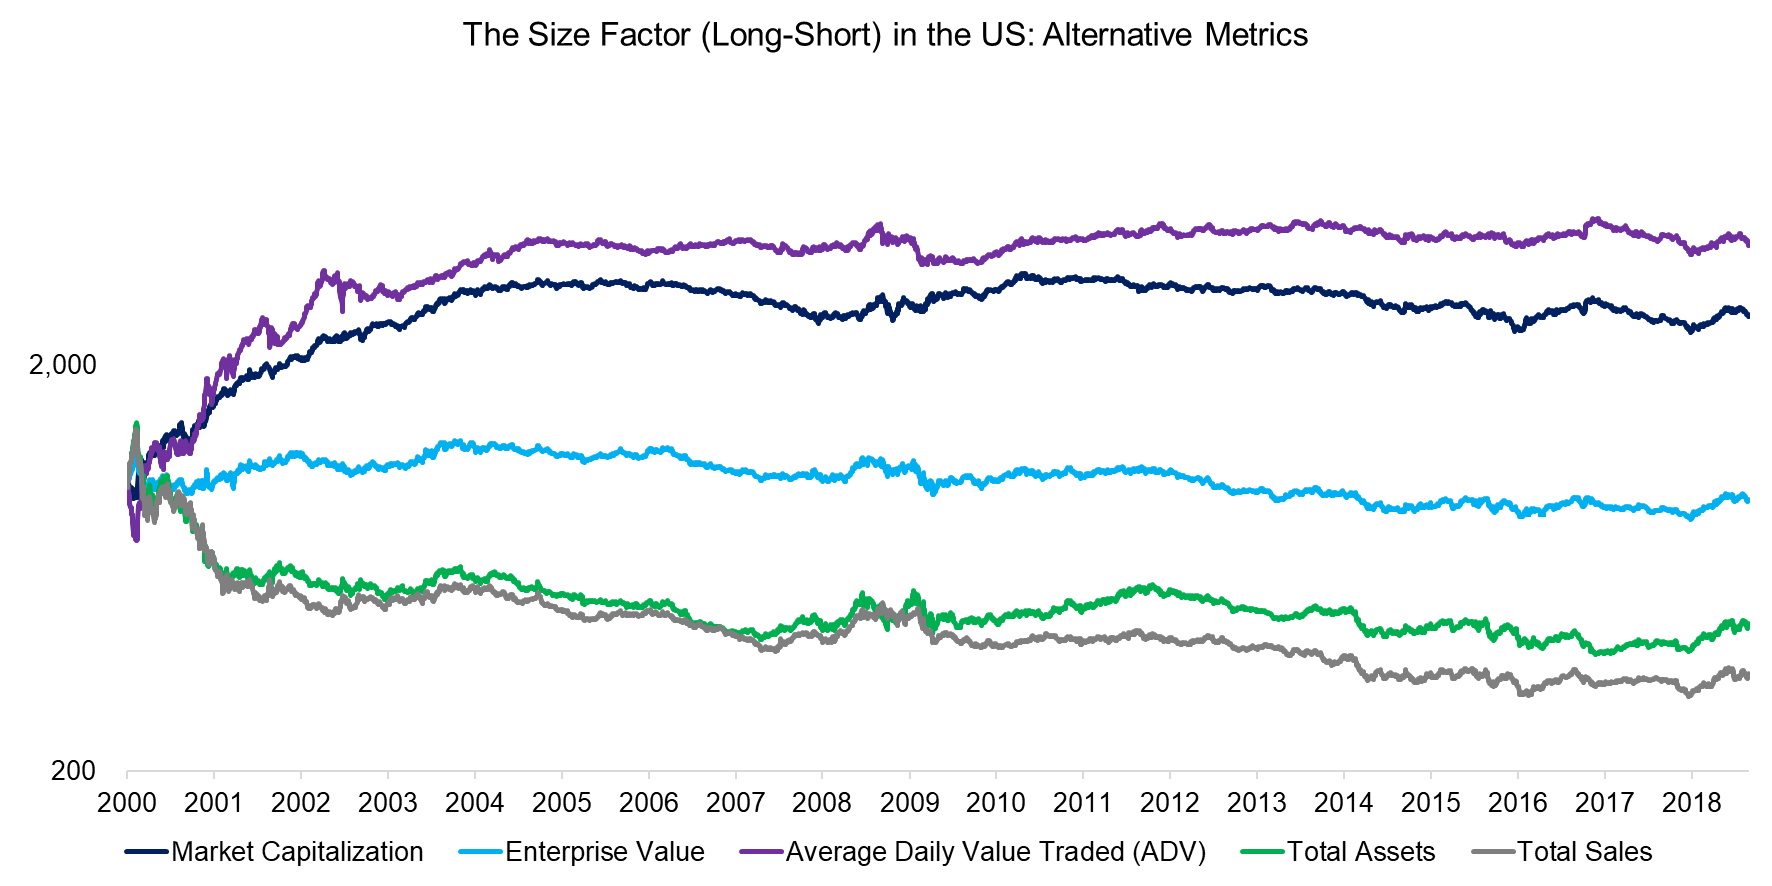 The Size Factor (Long-Short) in the US Alternative Metrics